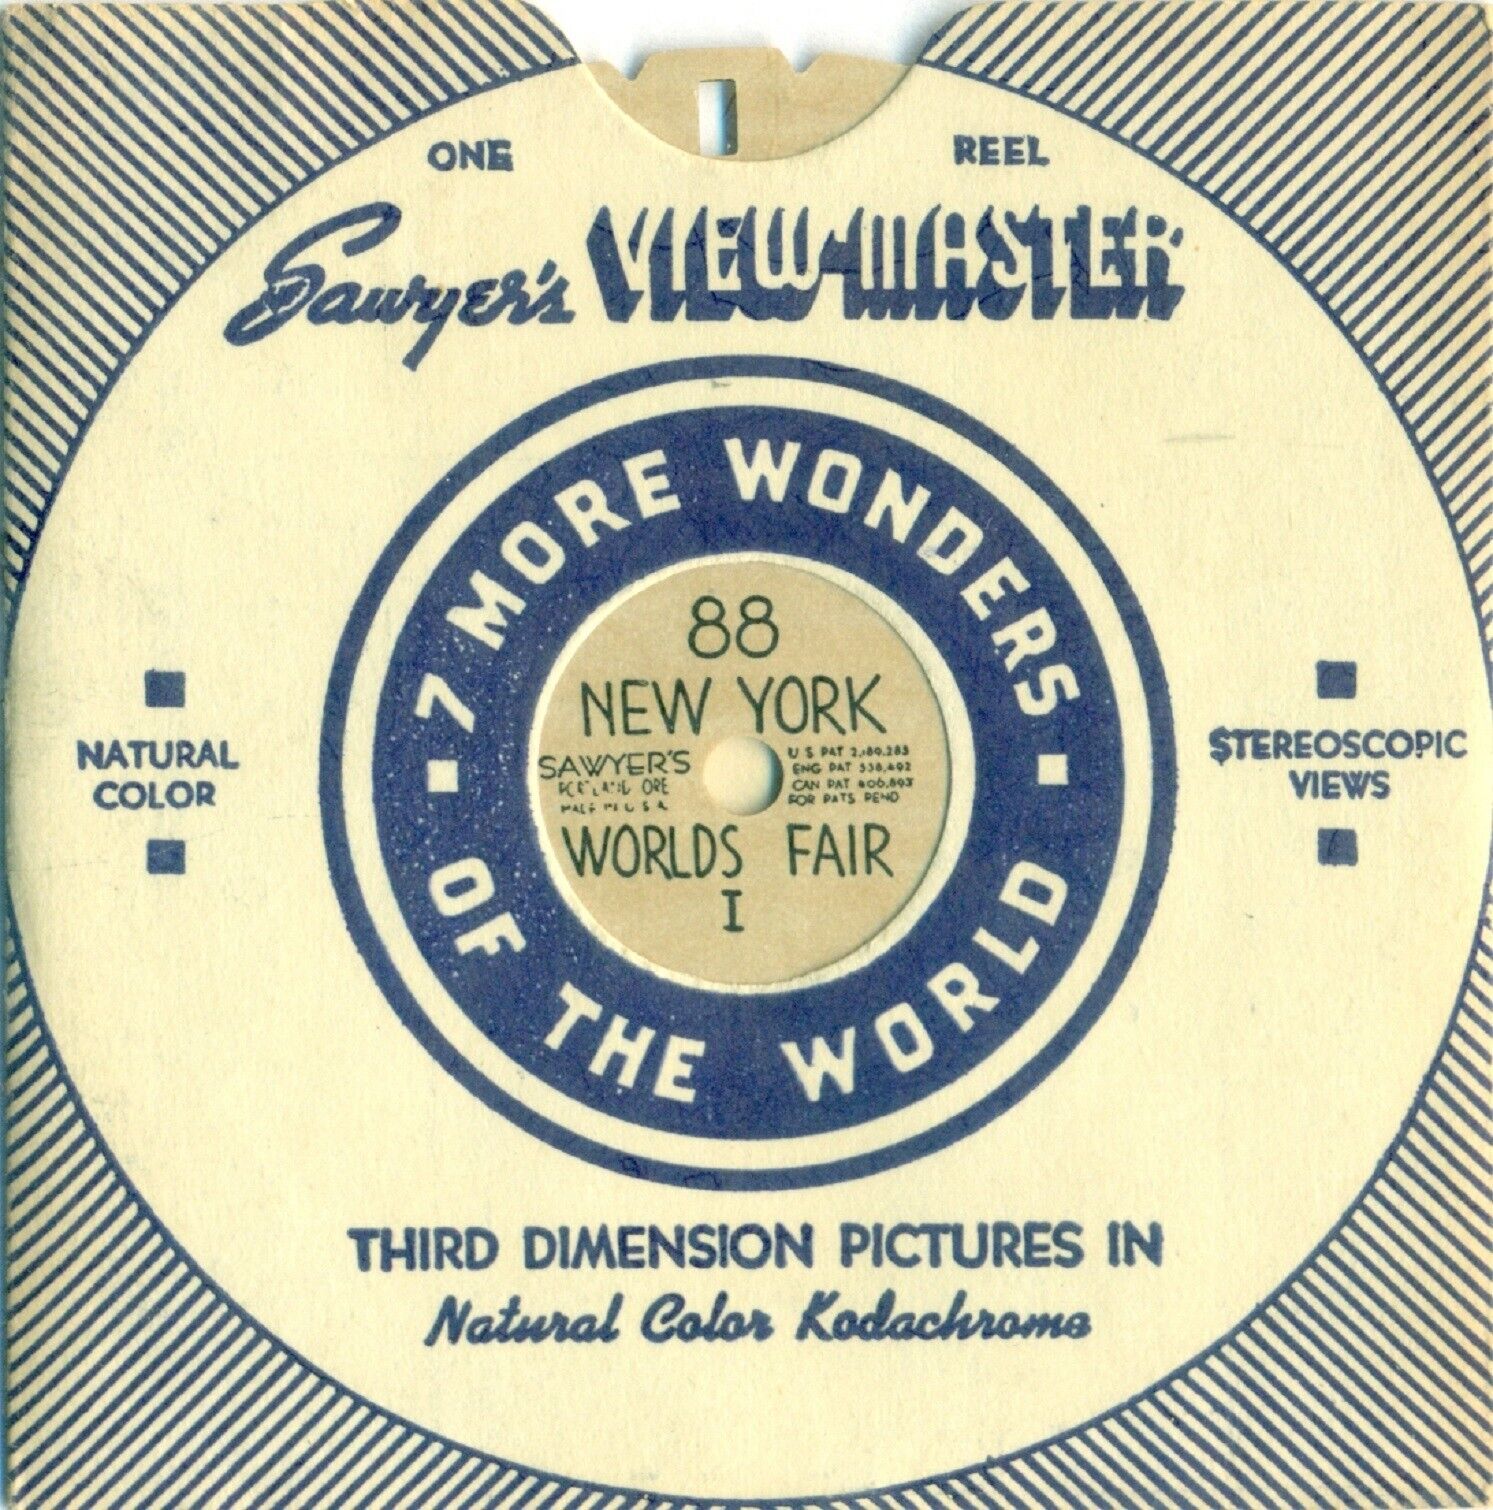 1939 New York World's Fair Sawyer's View-Master No. 88 Reel